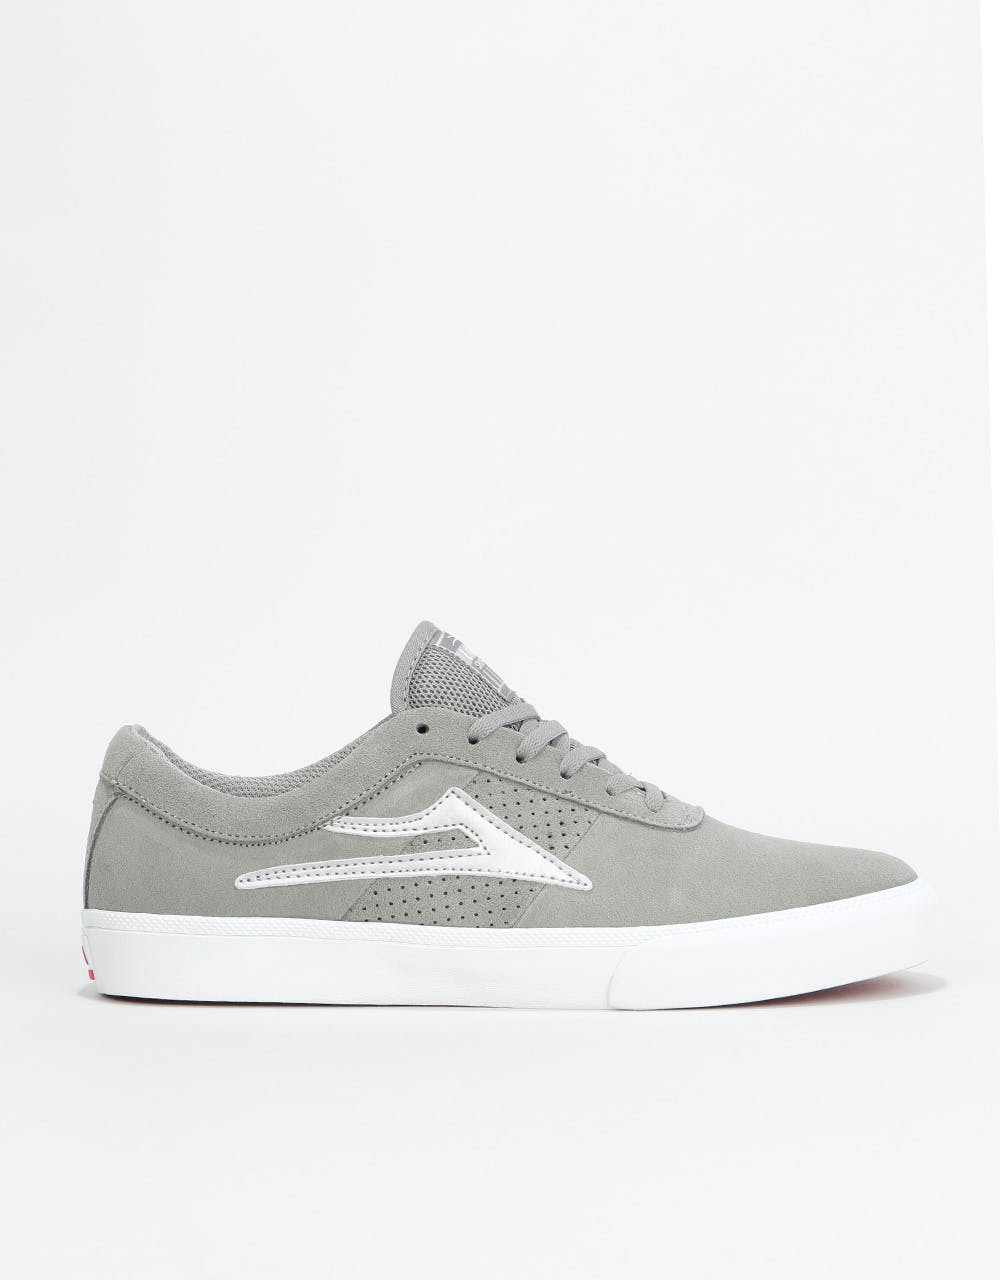 Lakai Sheffield Skate Shoes - Grey/Silver Suede